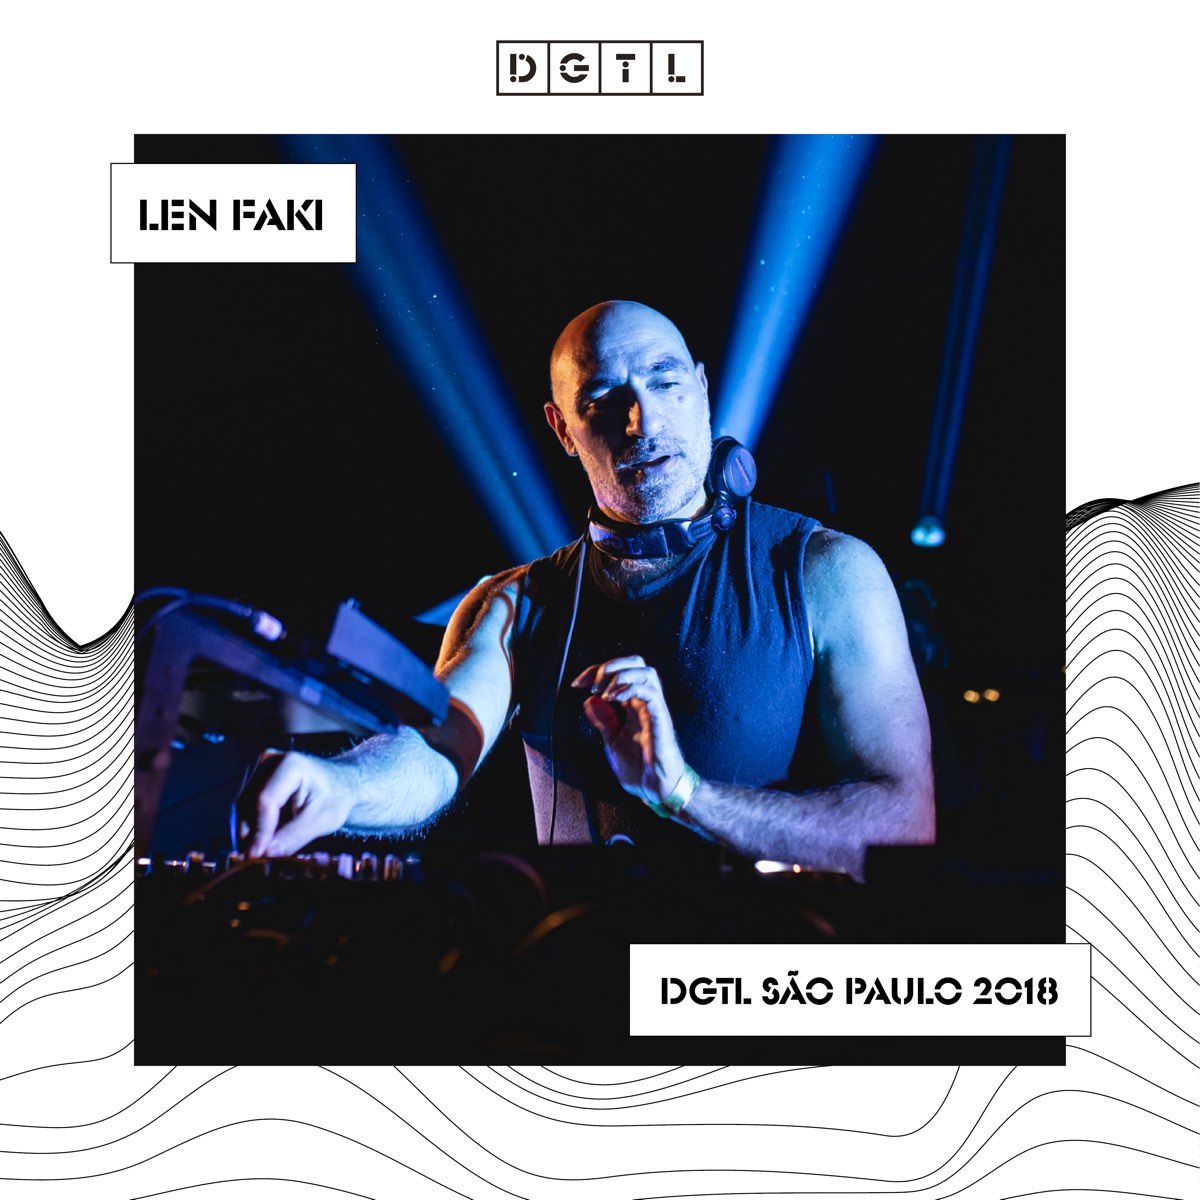 DGTL: Len Faki at DGTL São Paulo, 2018 (DJ Mix) by Len Faki on Apple Music